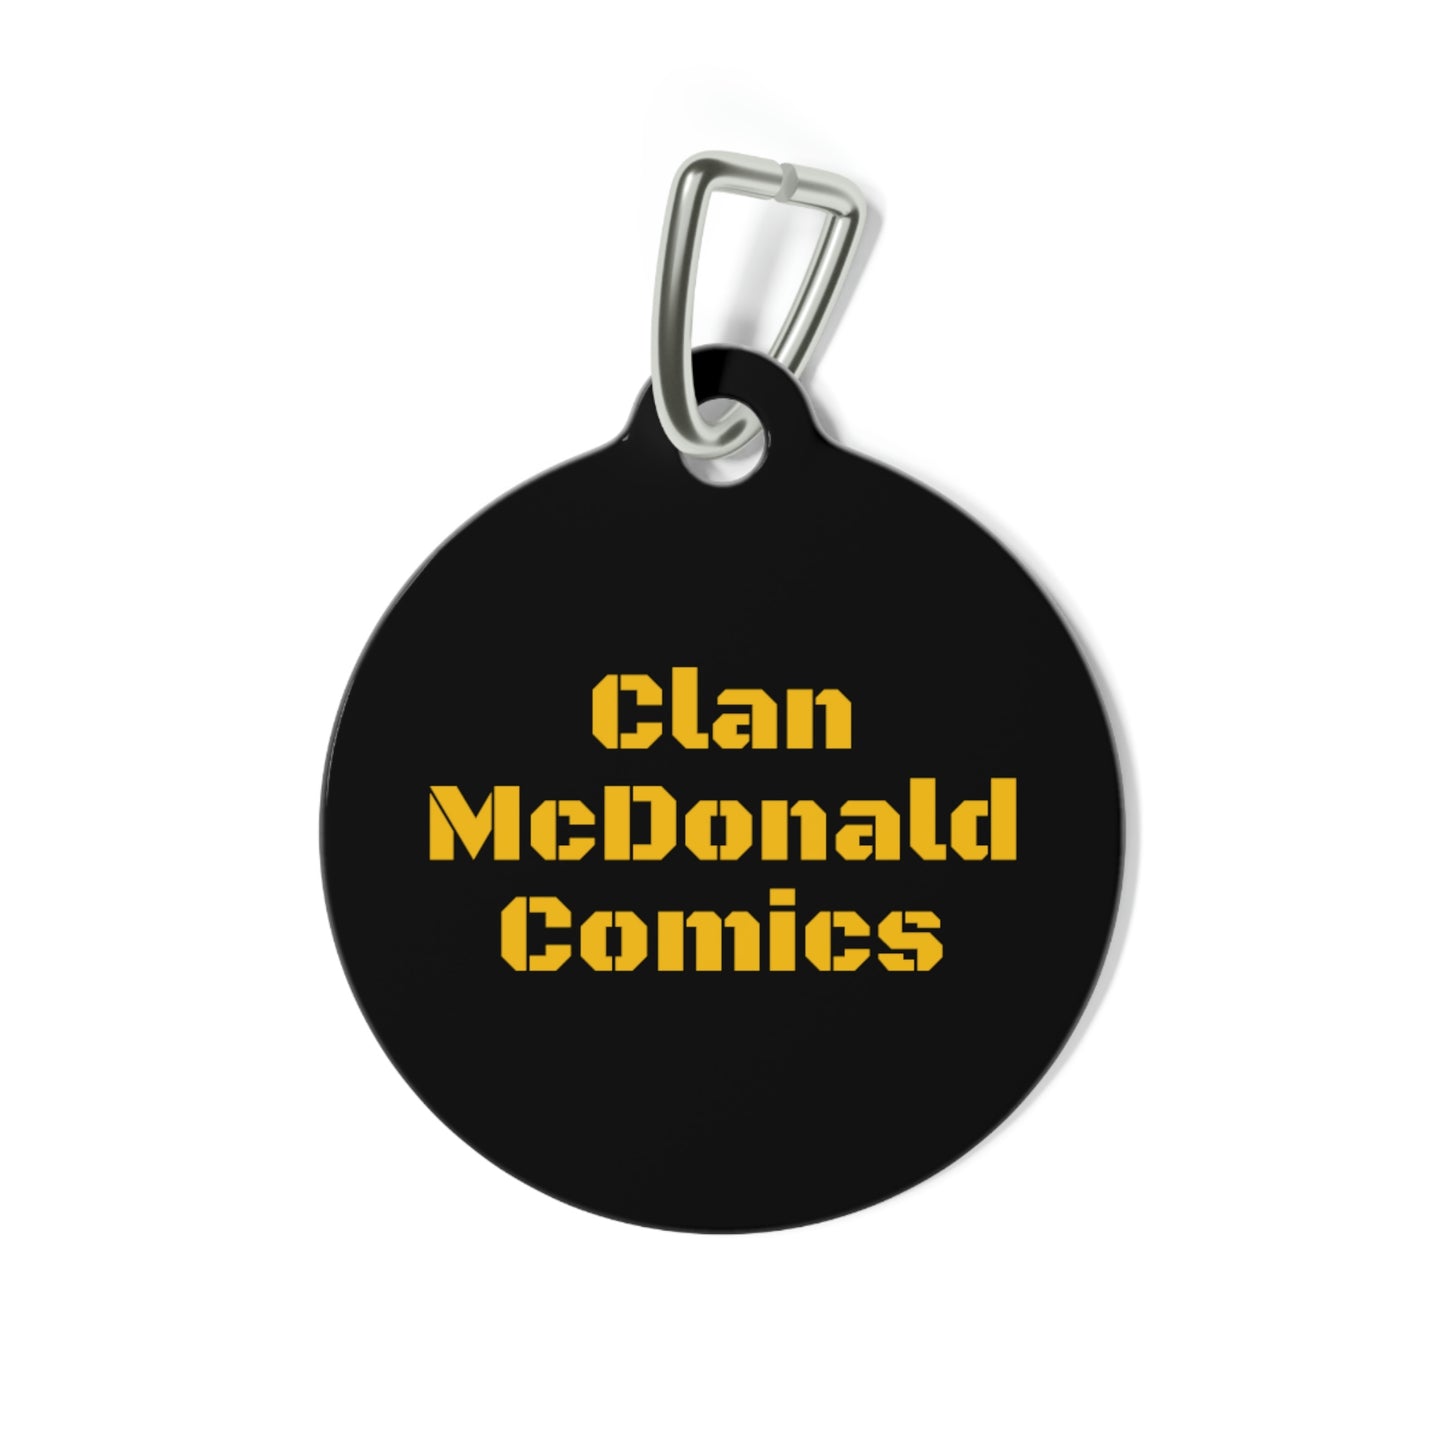 Clan McDonald Comics Pet Tag